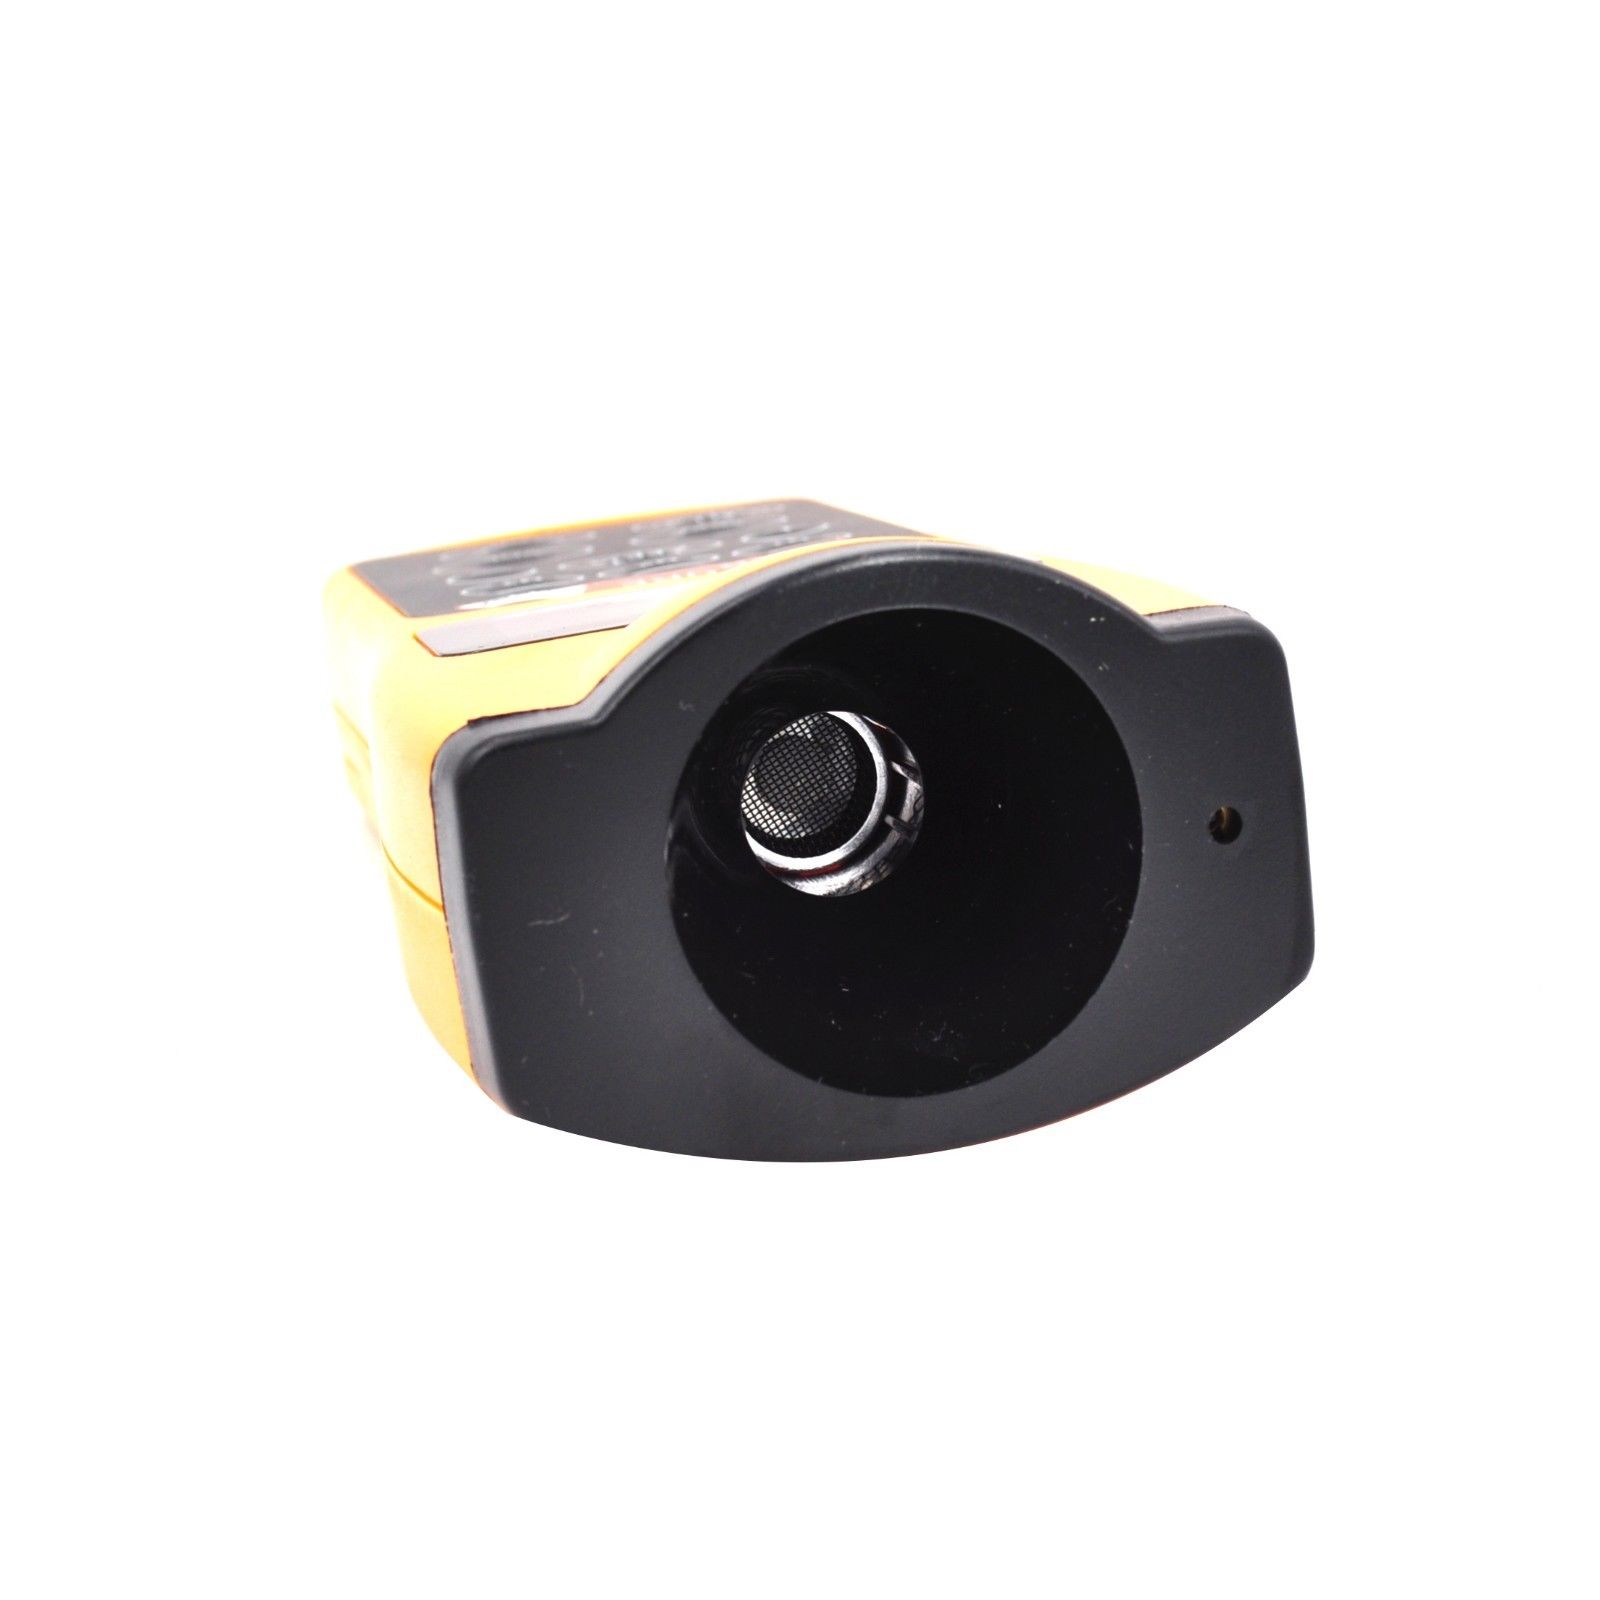 CP-3007-Digital-LCD-18M-Ultrasonic-Laser-Distance-Meter-Rangefinder-Medidor-Trena-Hunting-Measuring-908559